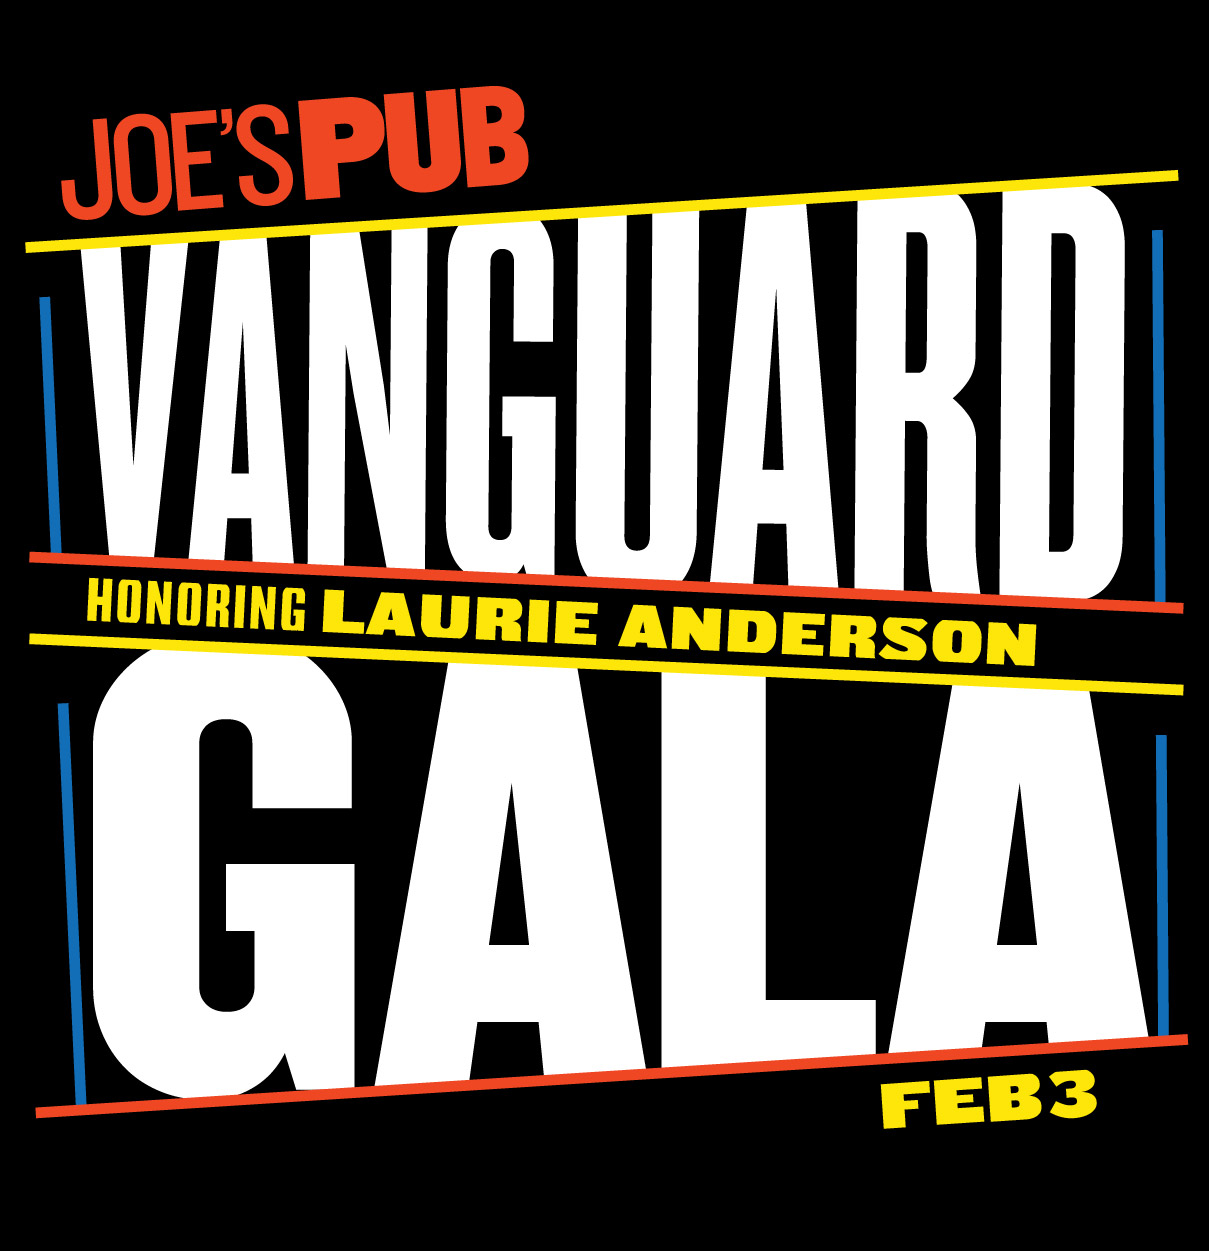 Joe's Pub Vanguard Gala: Feb 3. Honoring Laurie Anderson